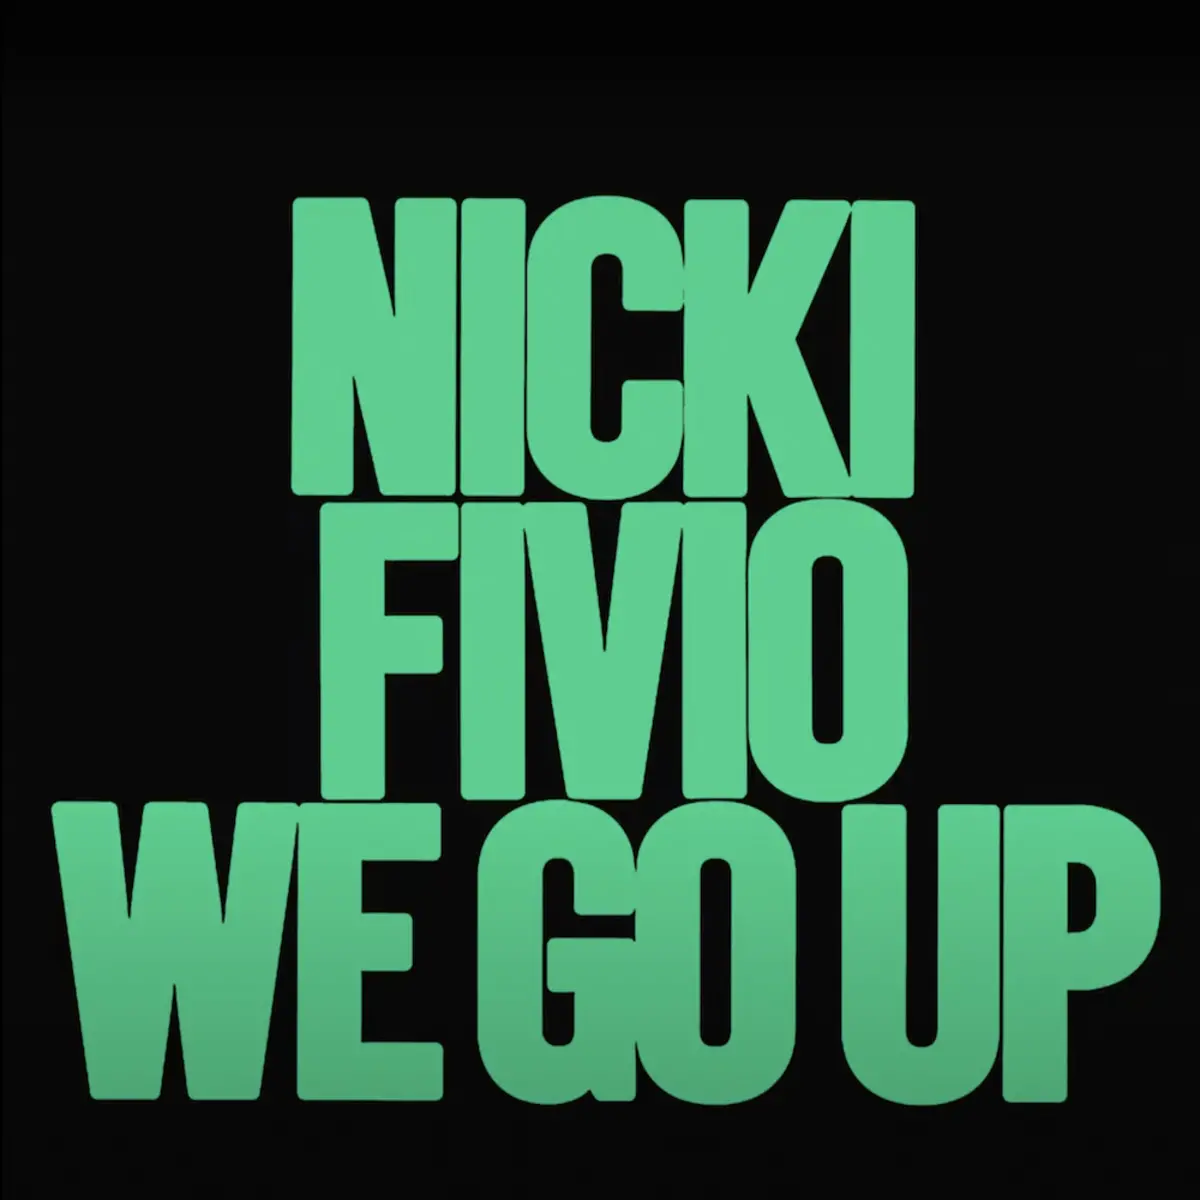 Nicki Minaj Fivio Foreign We Go Up